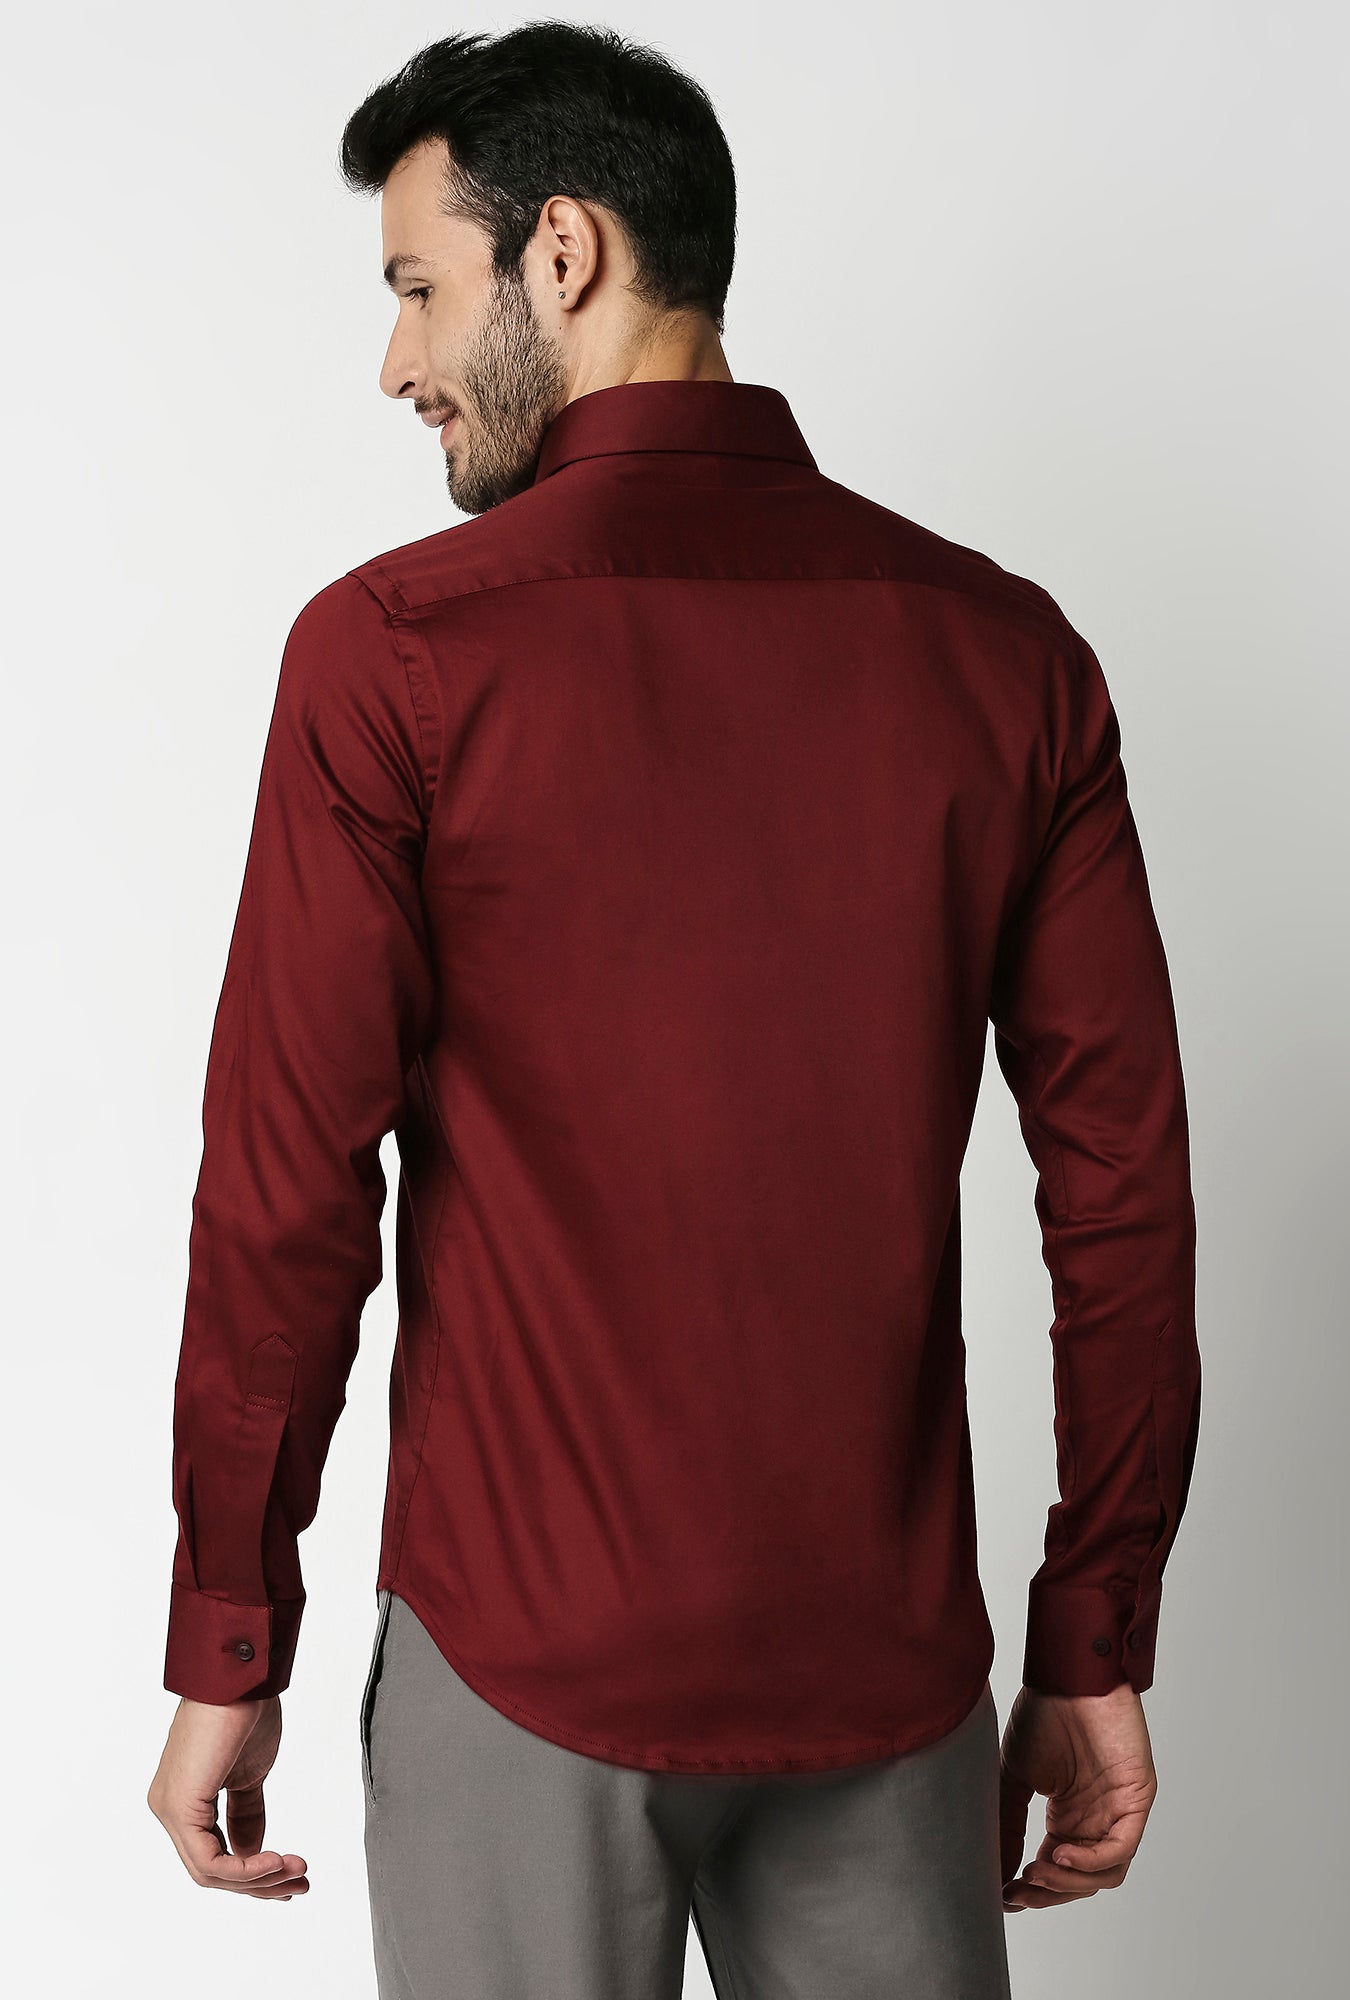 Fostino Plain Lycra Maroon Full Sleeves Shirt - Fostino - Shirts